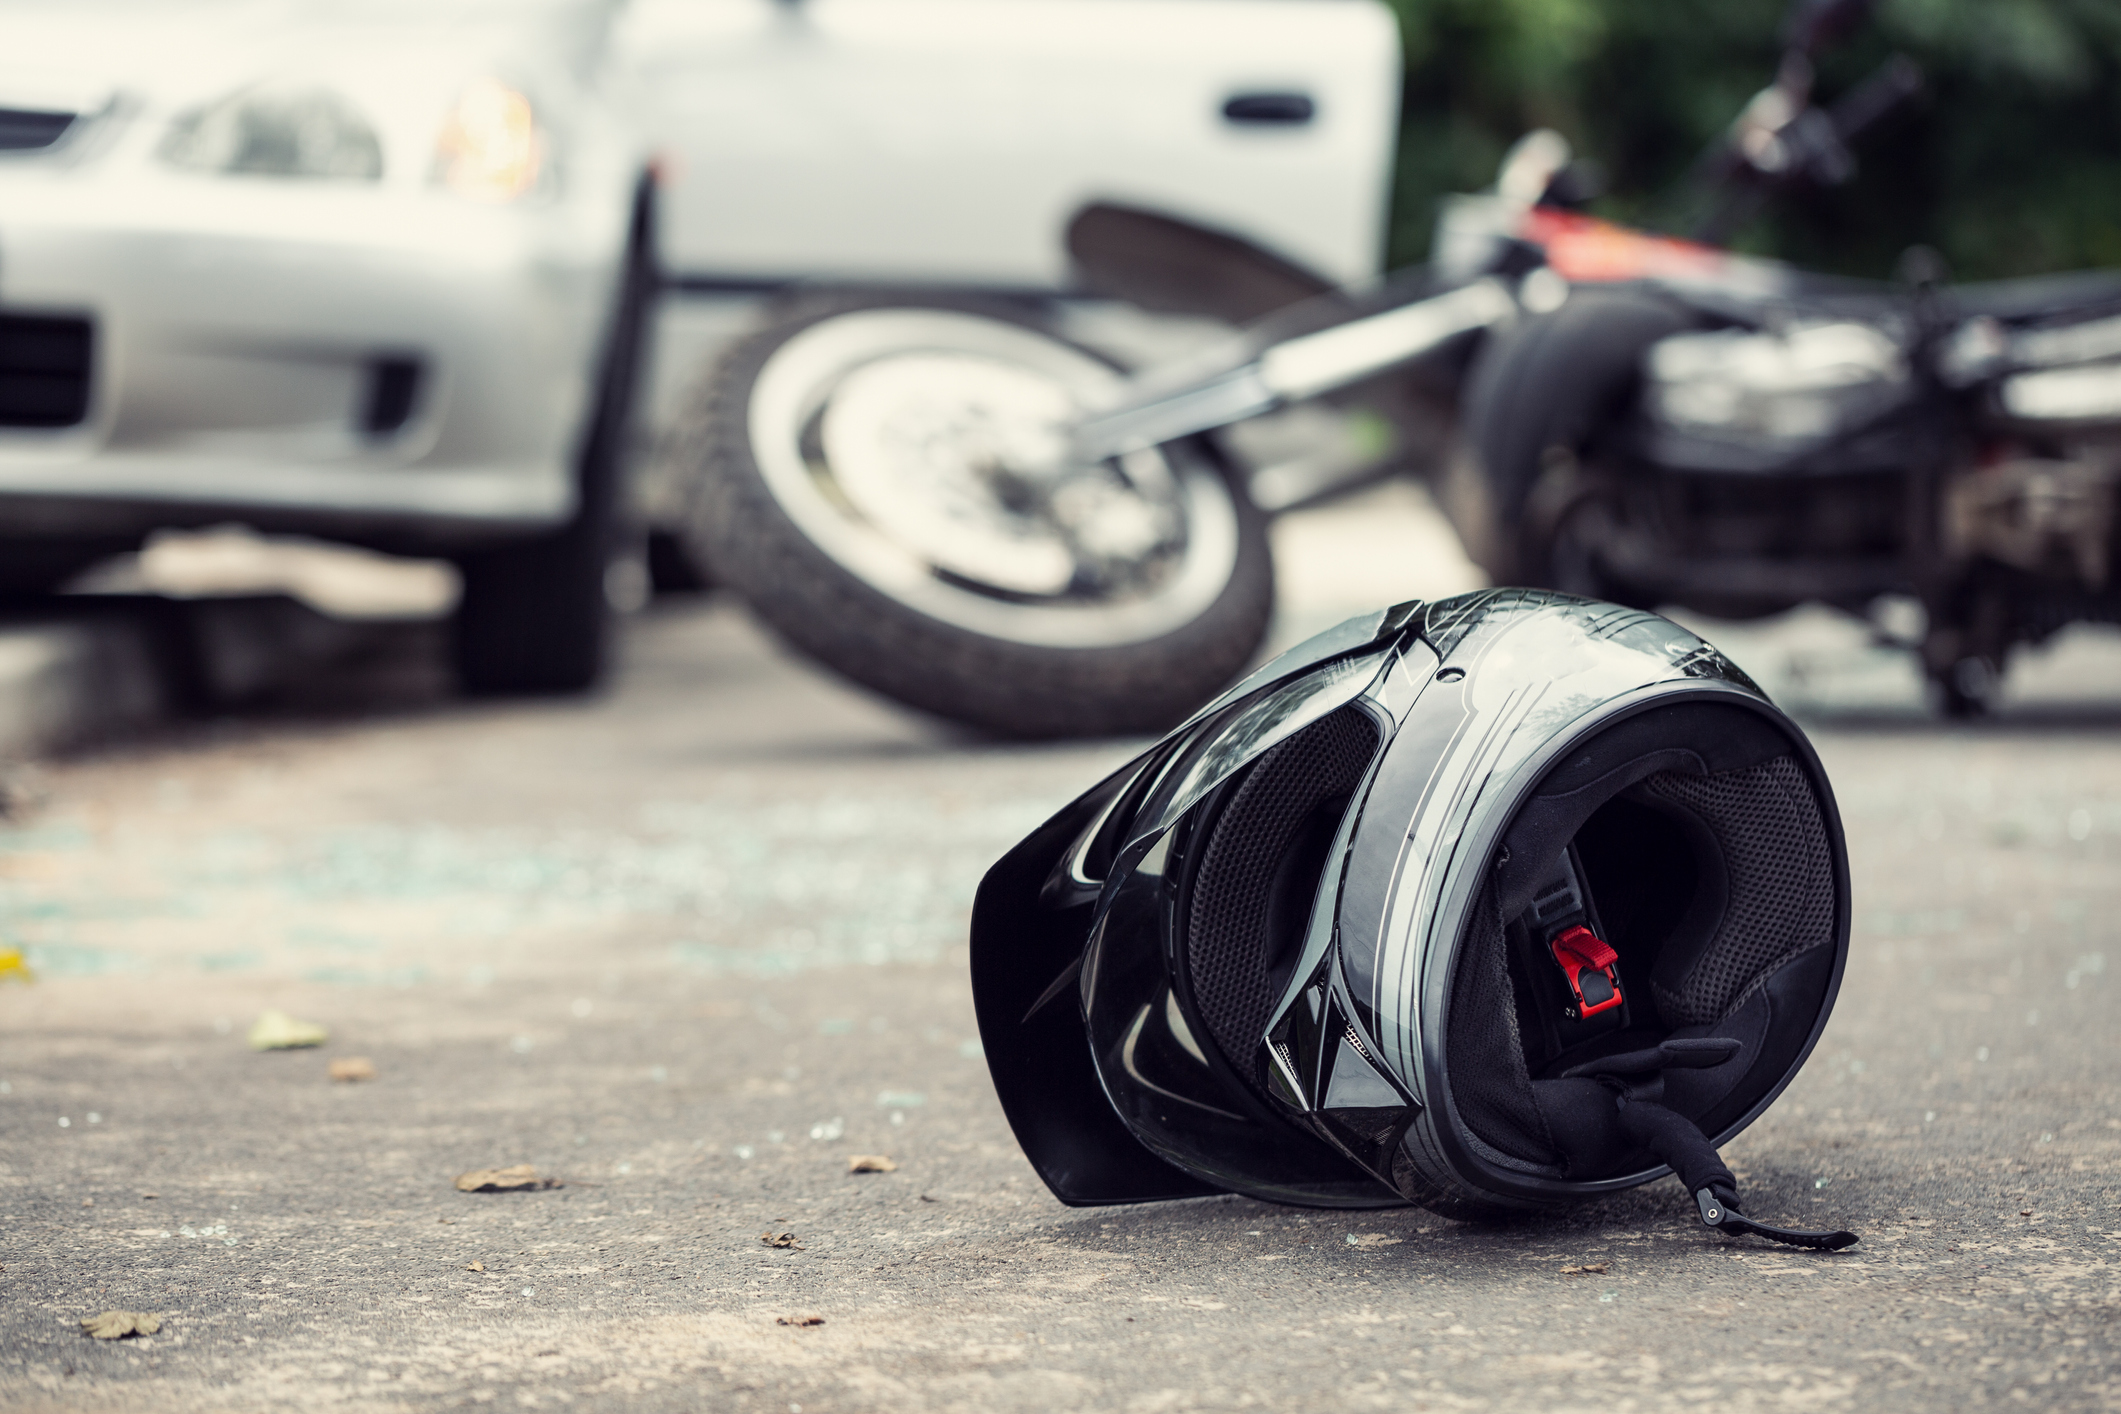 bike accidents require medical bills w/ insurance company